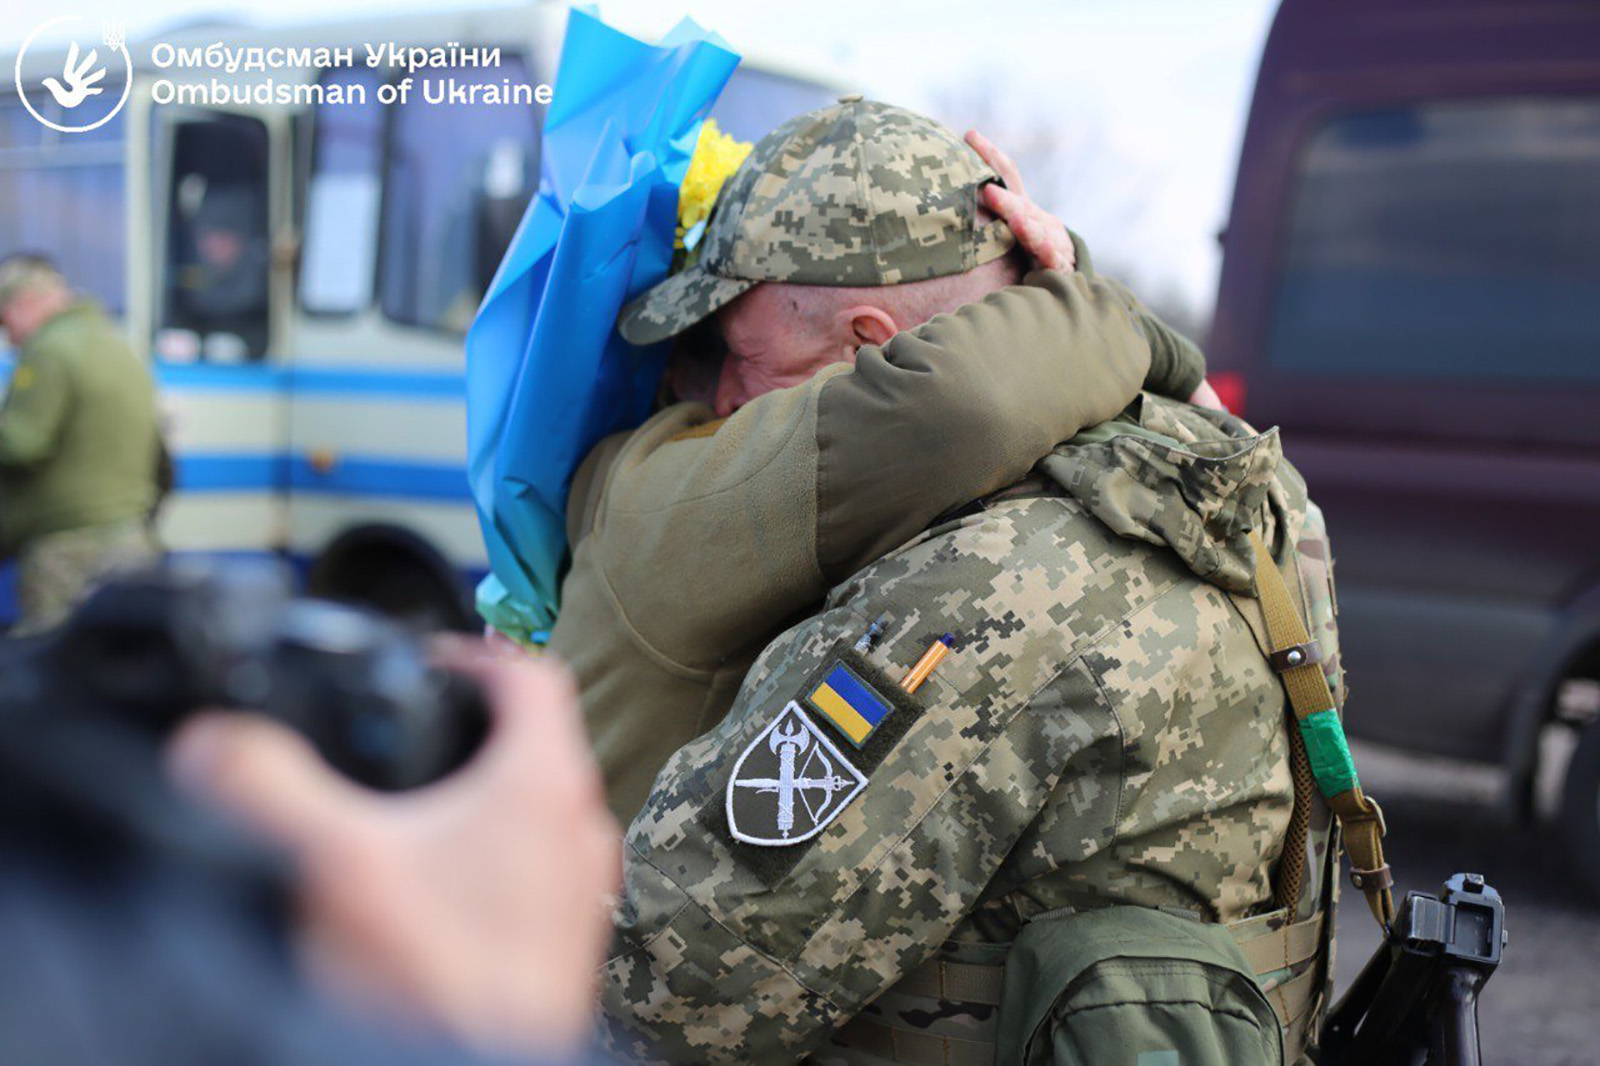 Ukraine's presidential office head, Andriy Yermak confirmed there was a prisoner swap saying 100 Ukrainians were returned home.